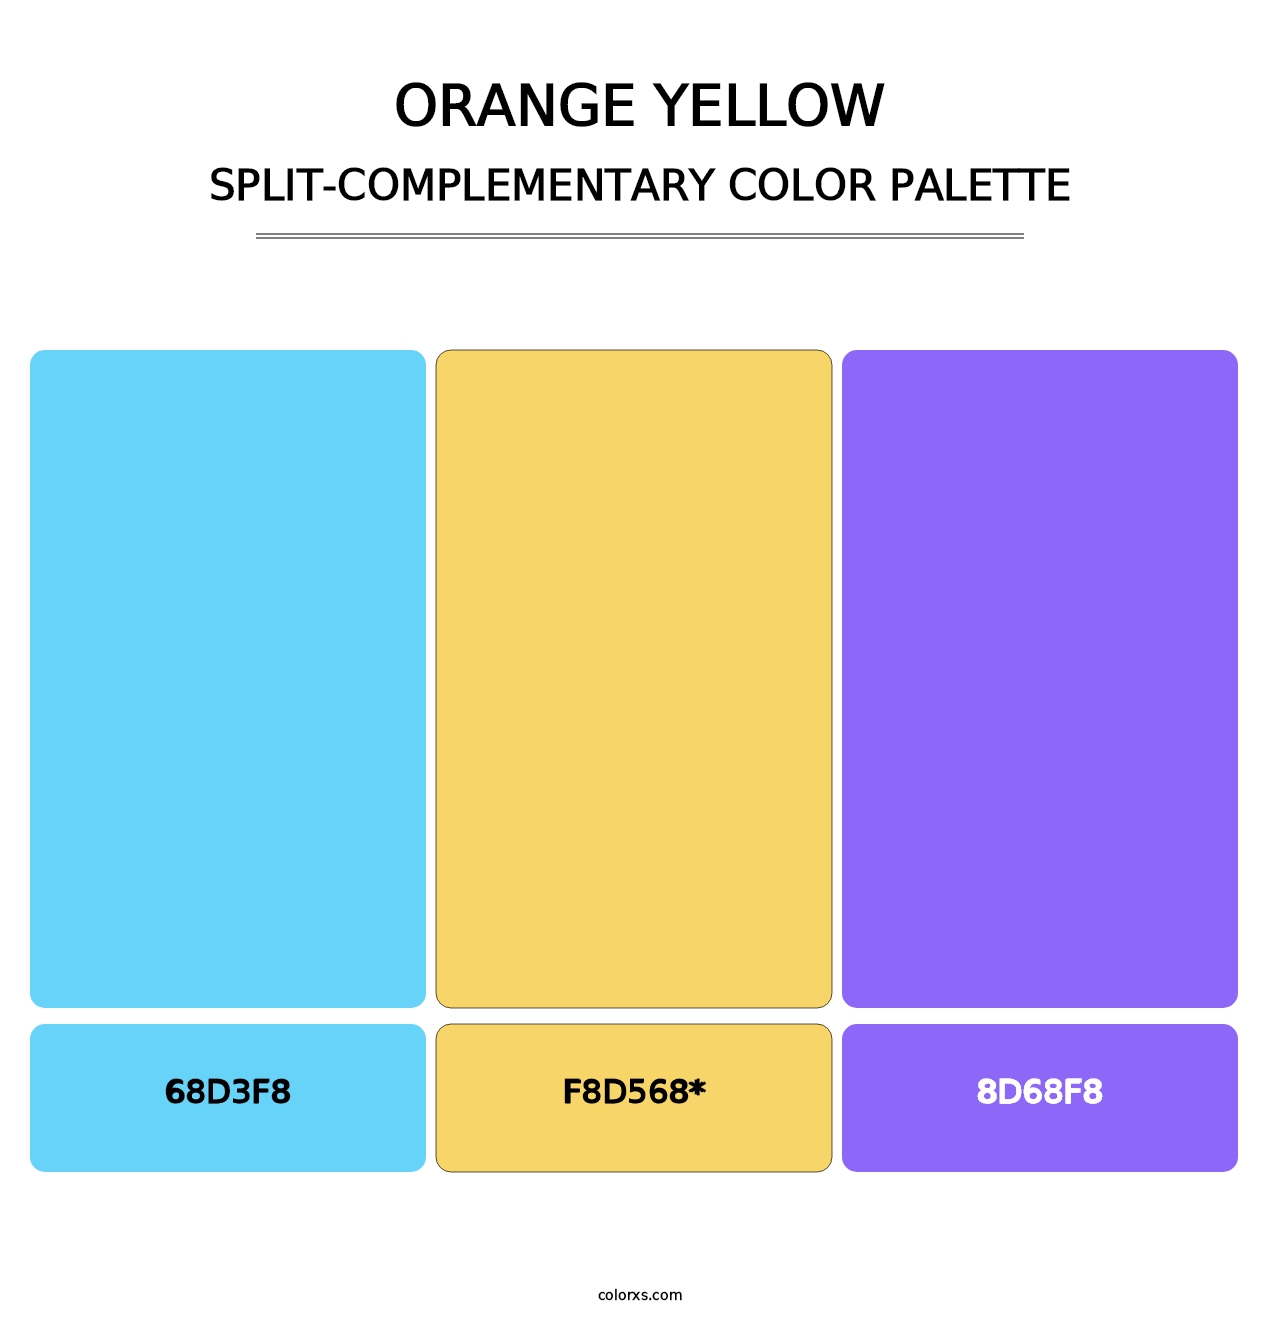 Orange Yellow - Split-Complementary Color Palette